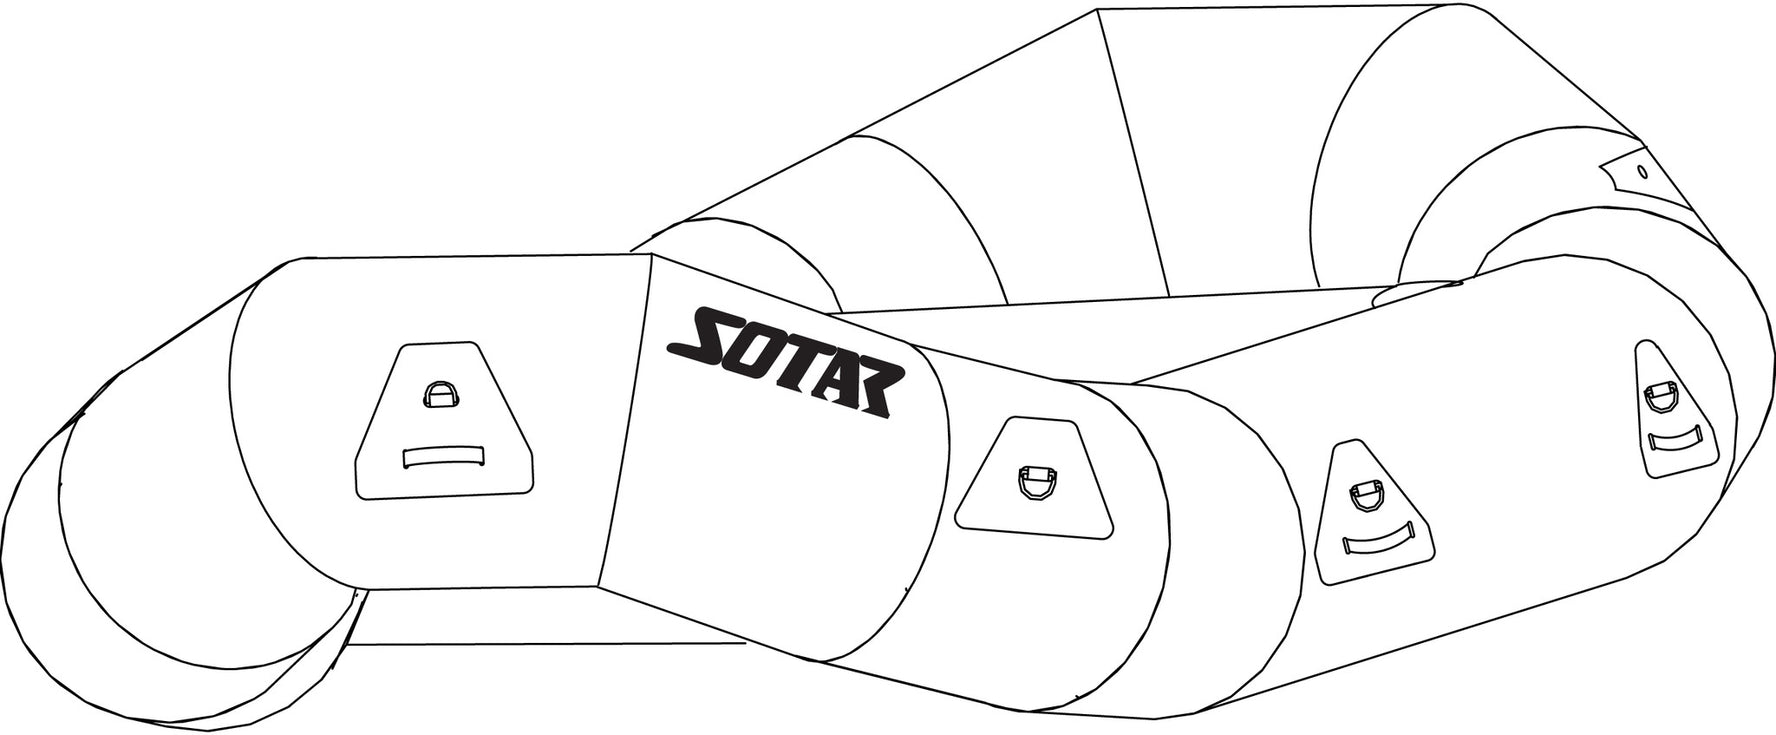 SOTAR ST 15' Classic Raft